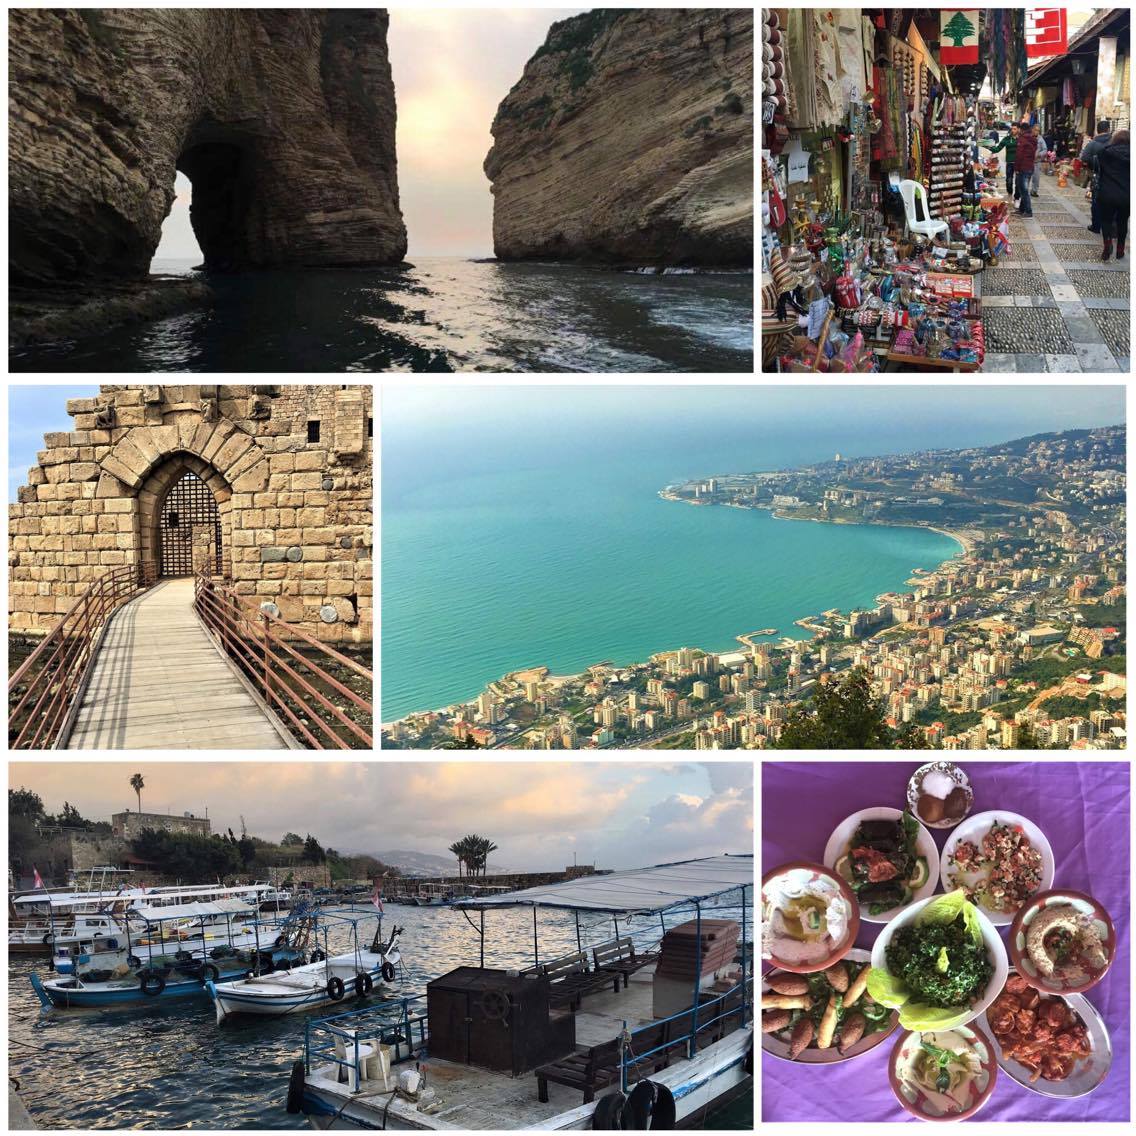 Meet the charming Lebanon